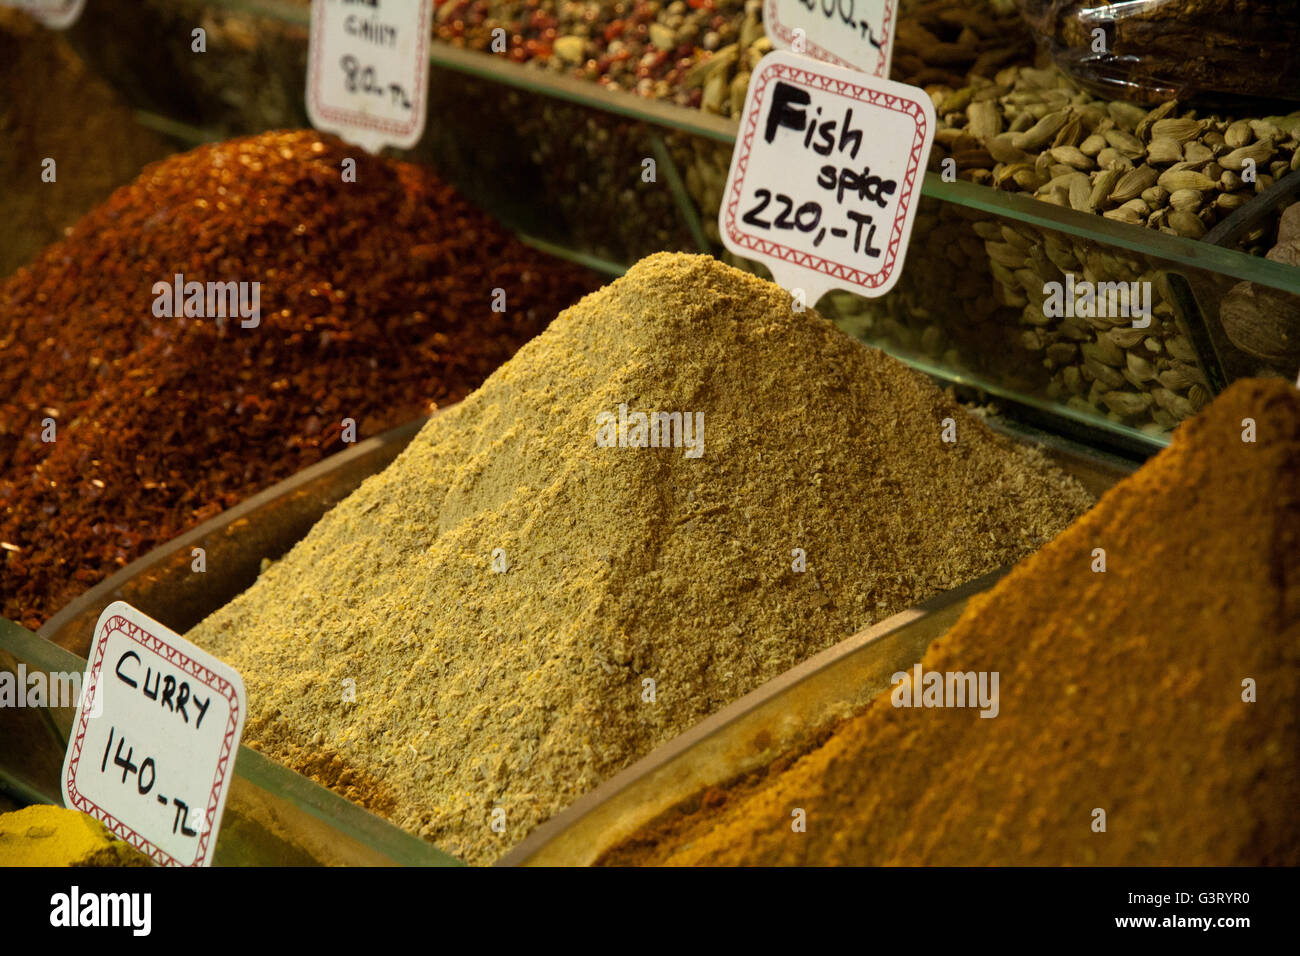 Fish spices on market Stock Photo